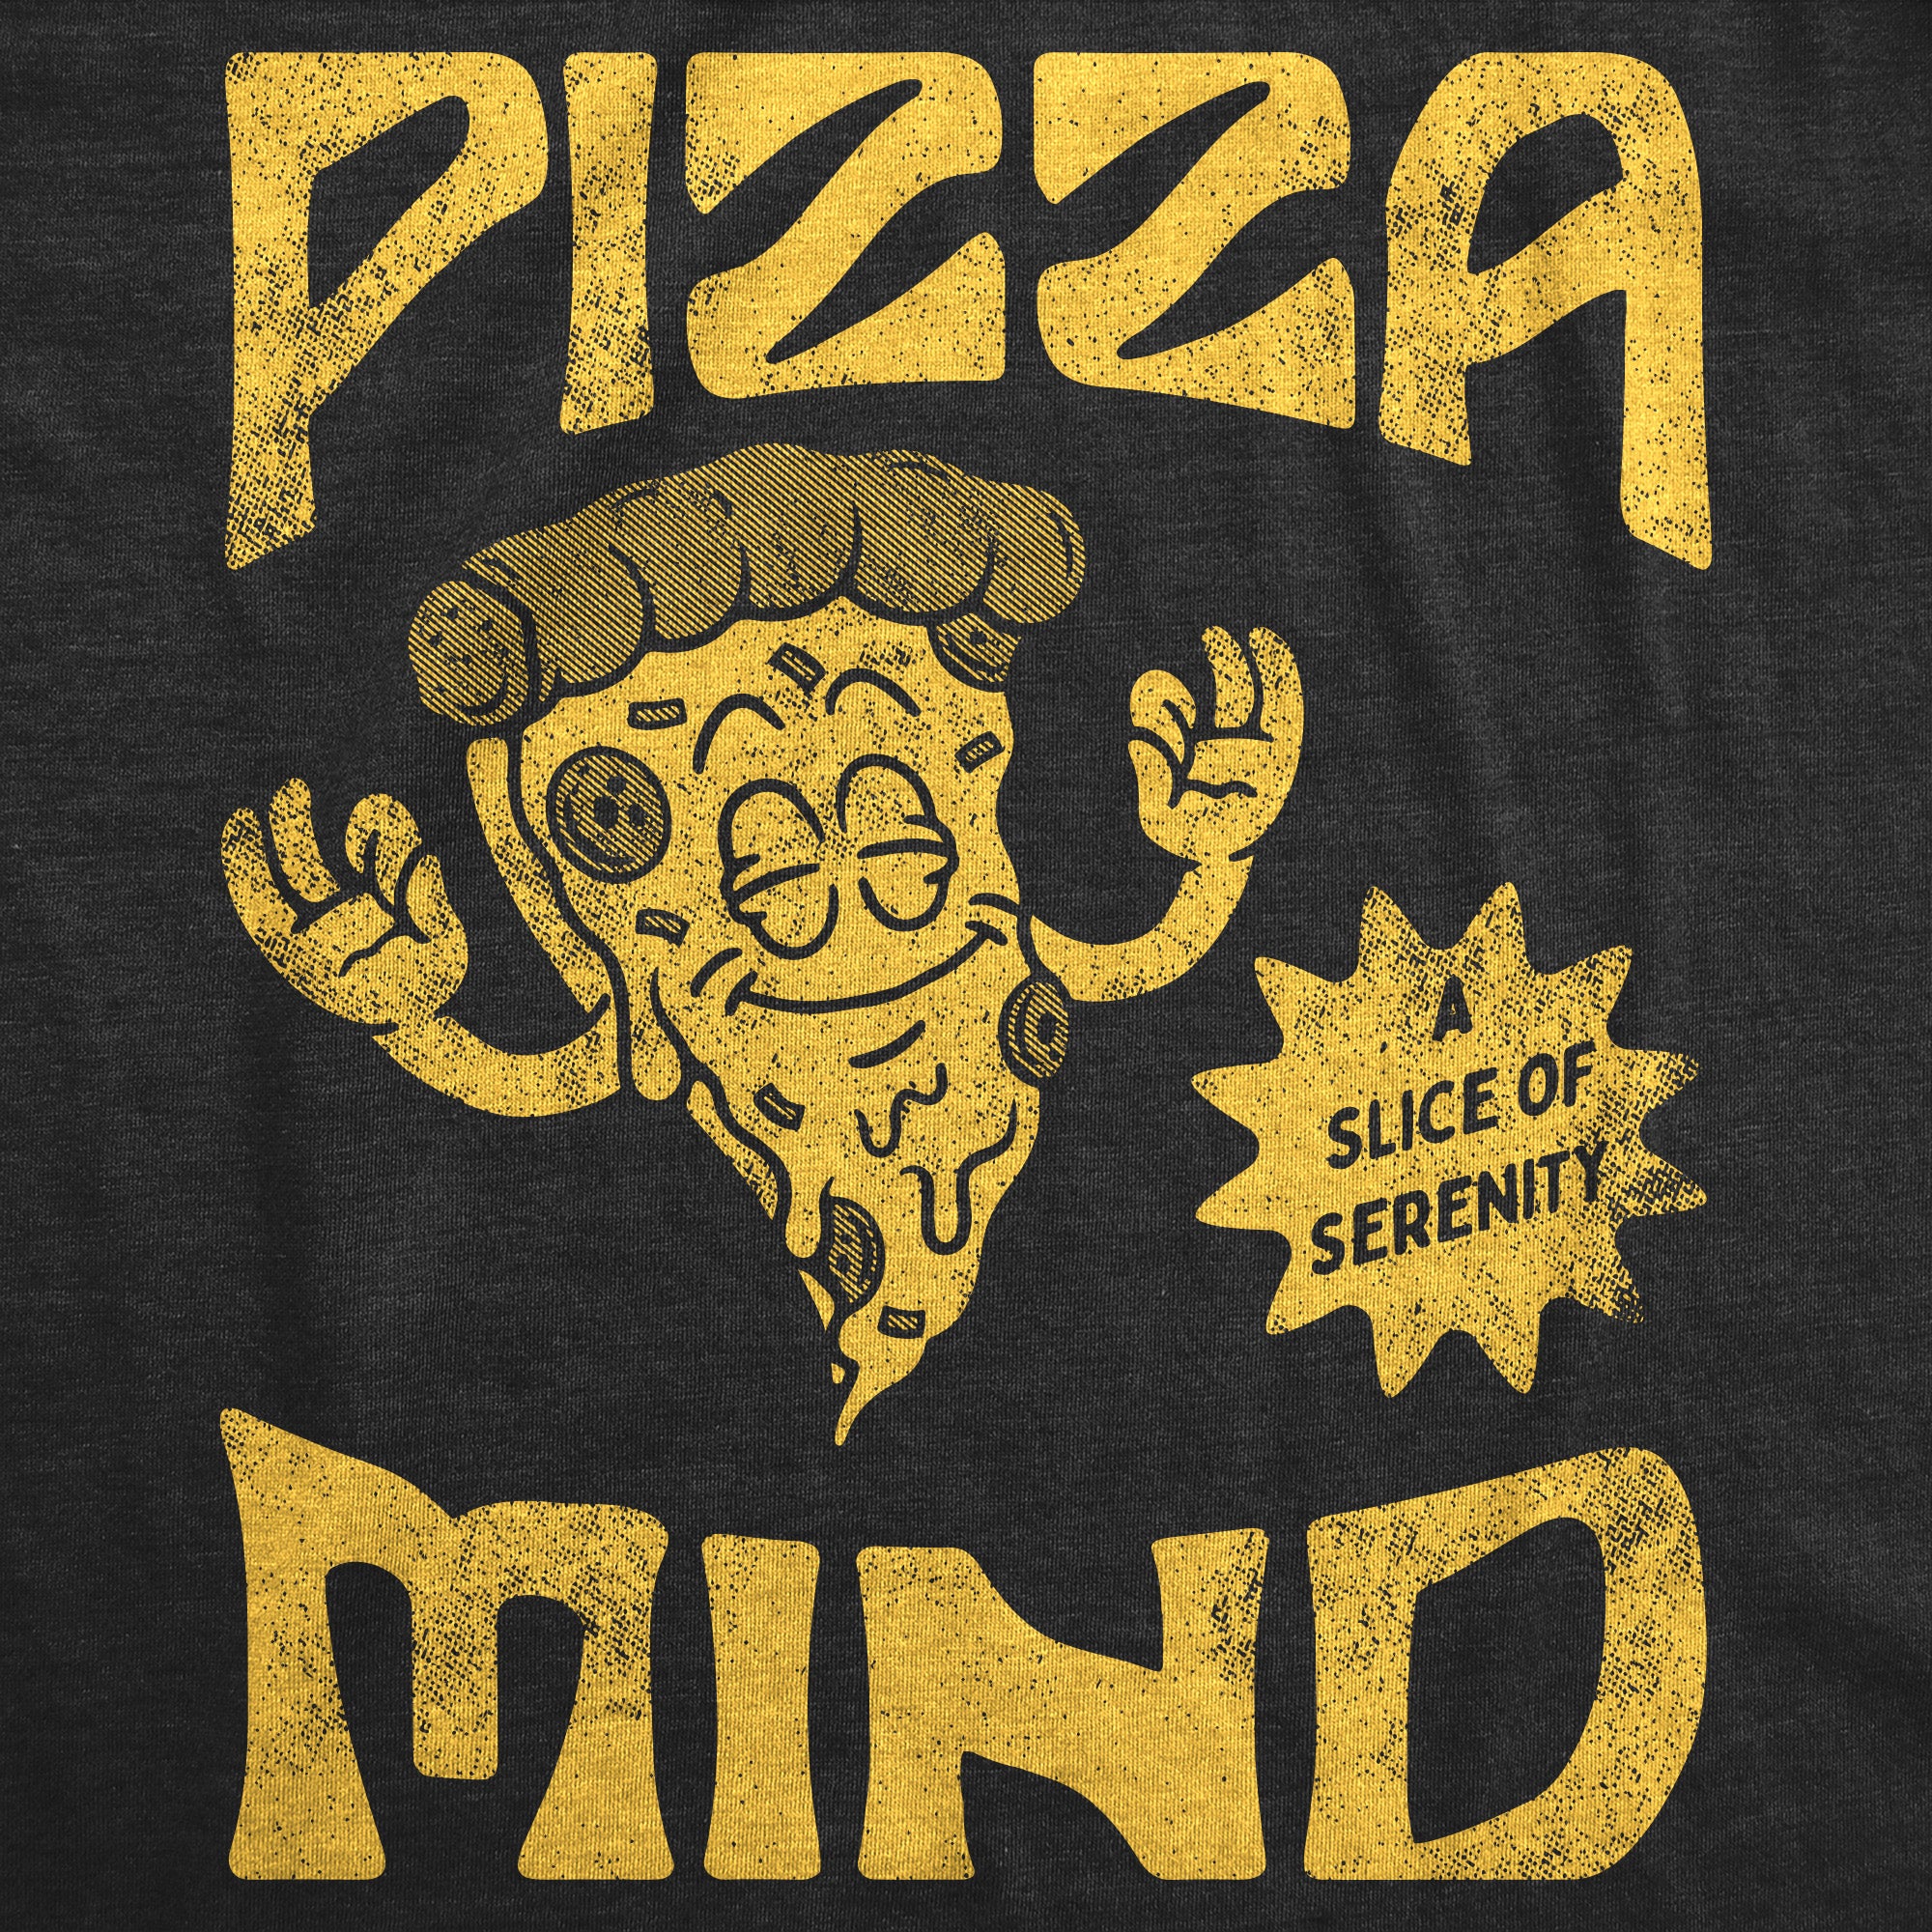 Funny Heather Black - Pizza Mind Pizza Mind Womens T Shirt Nerdy Food sarcastic Tee